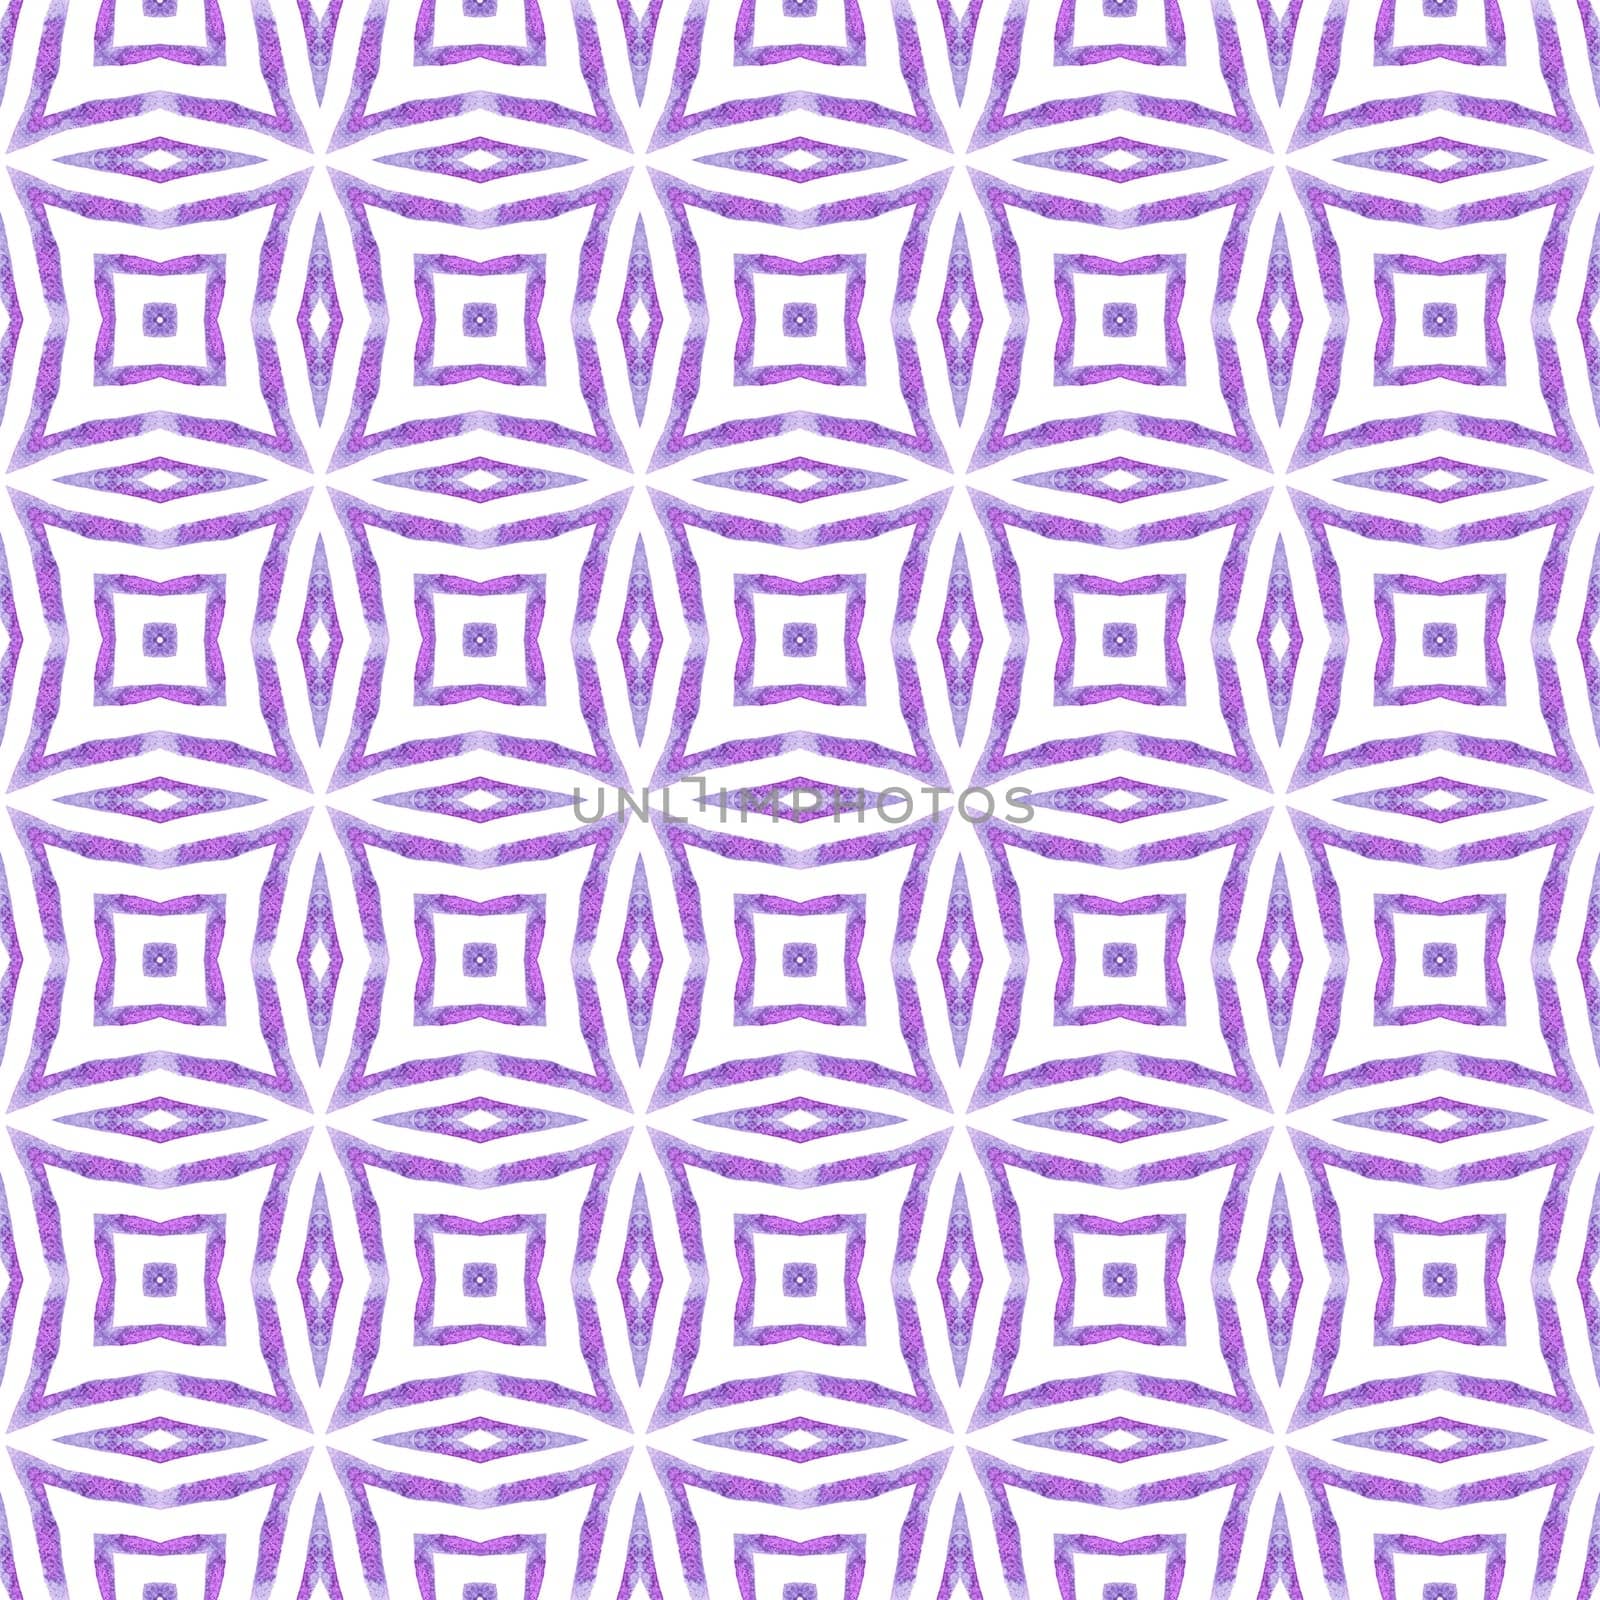 Textile ready imaginative print, swimwear fabric, wallpaper, wrapping. Purple quaint boho chic summer design. Arabesque hand drawn design. Oriental arabesque hand drawn border.